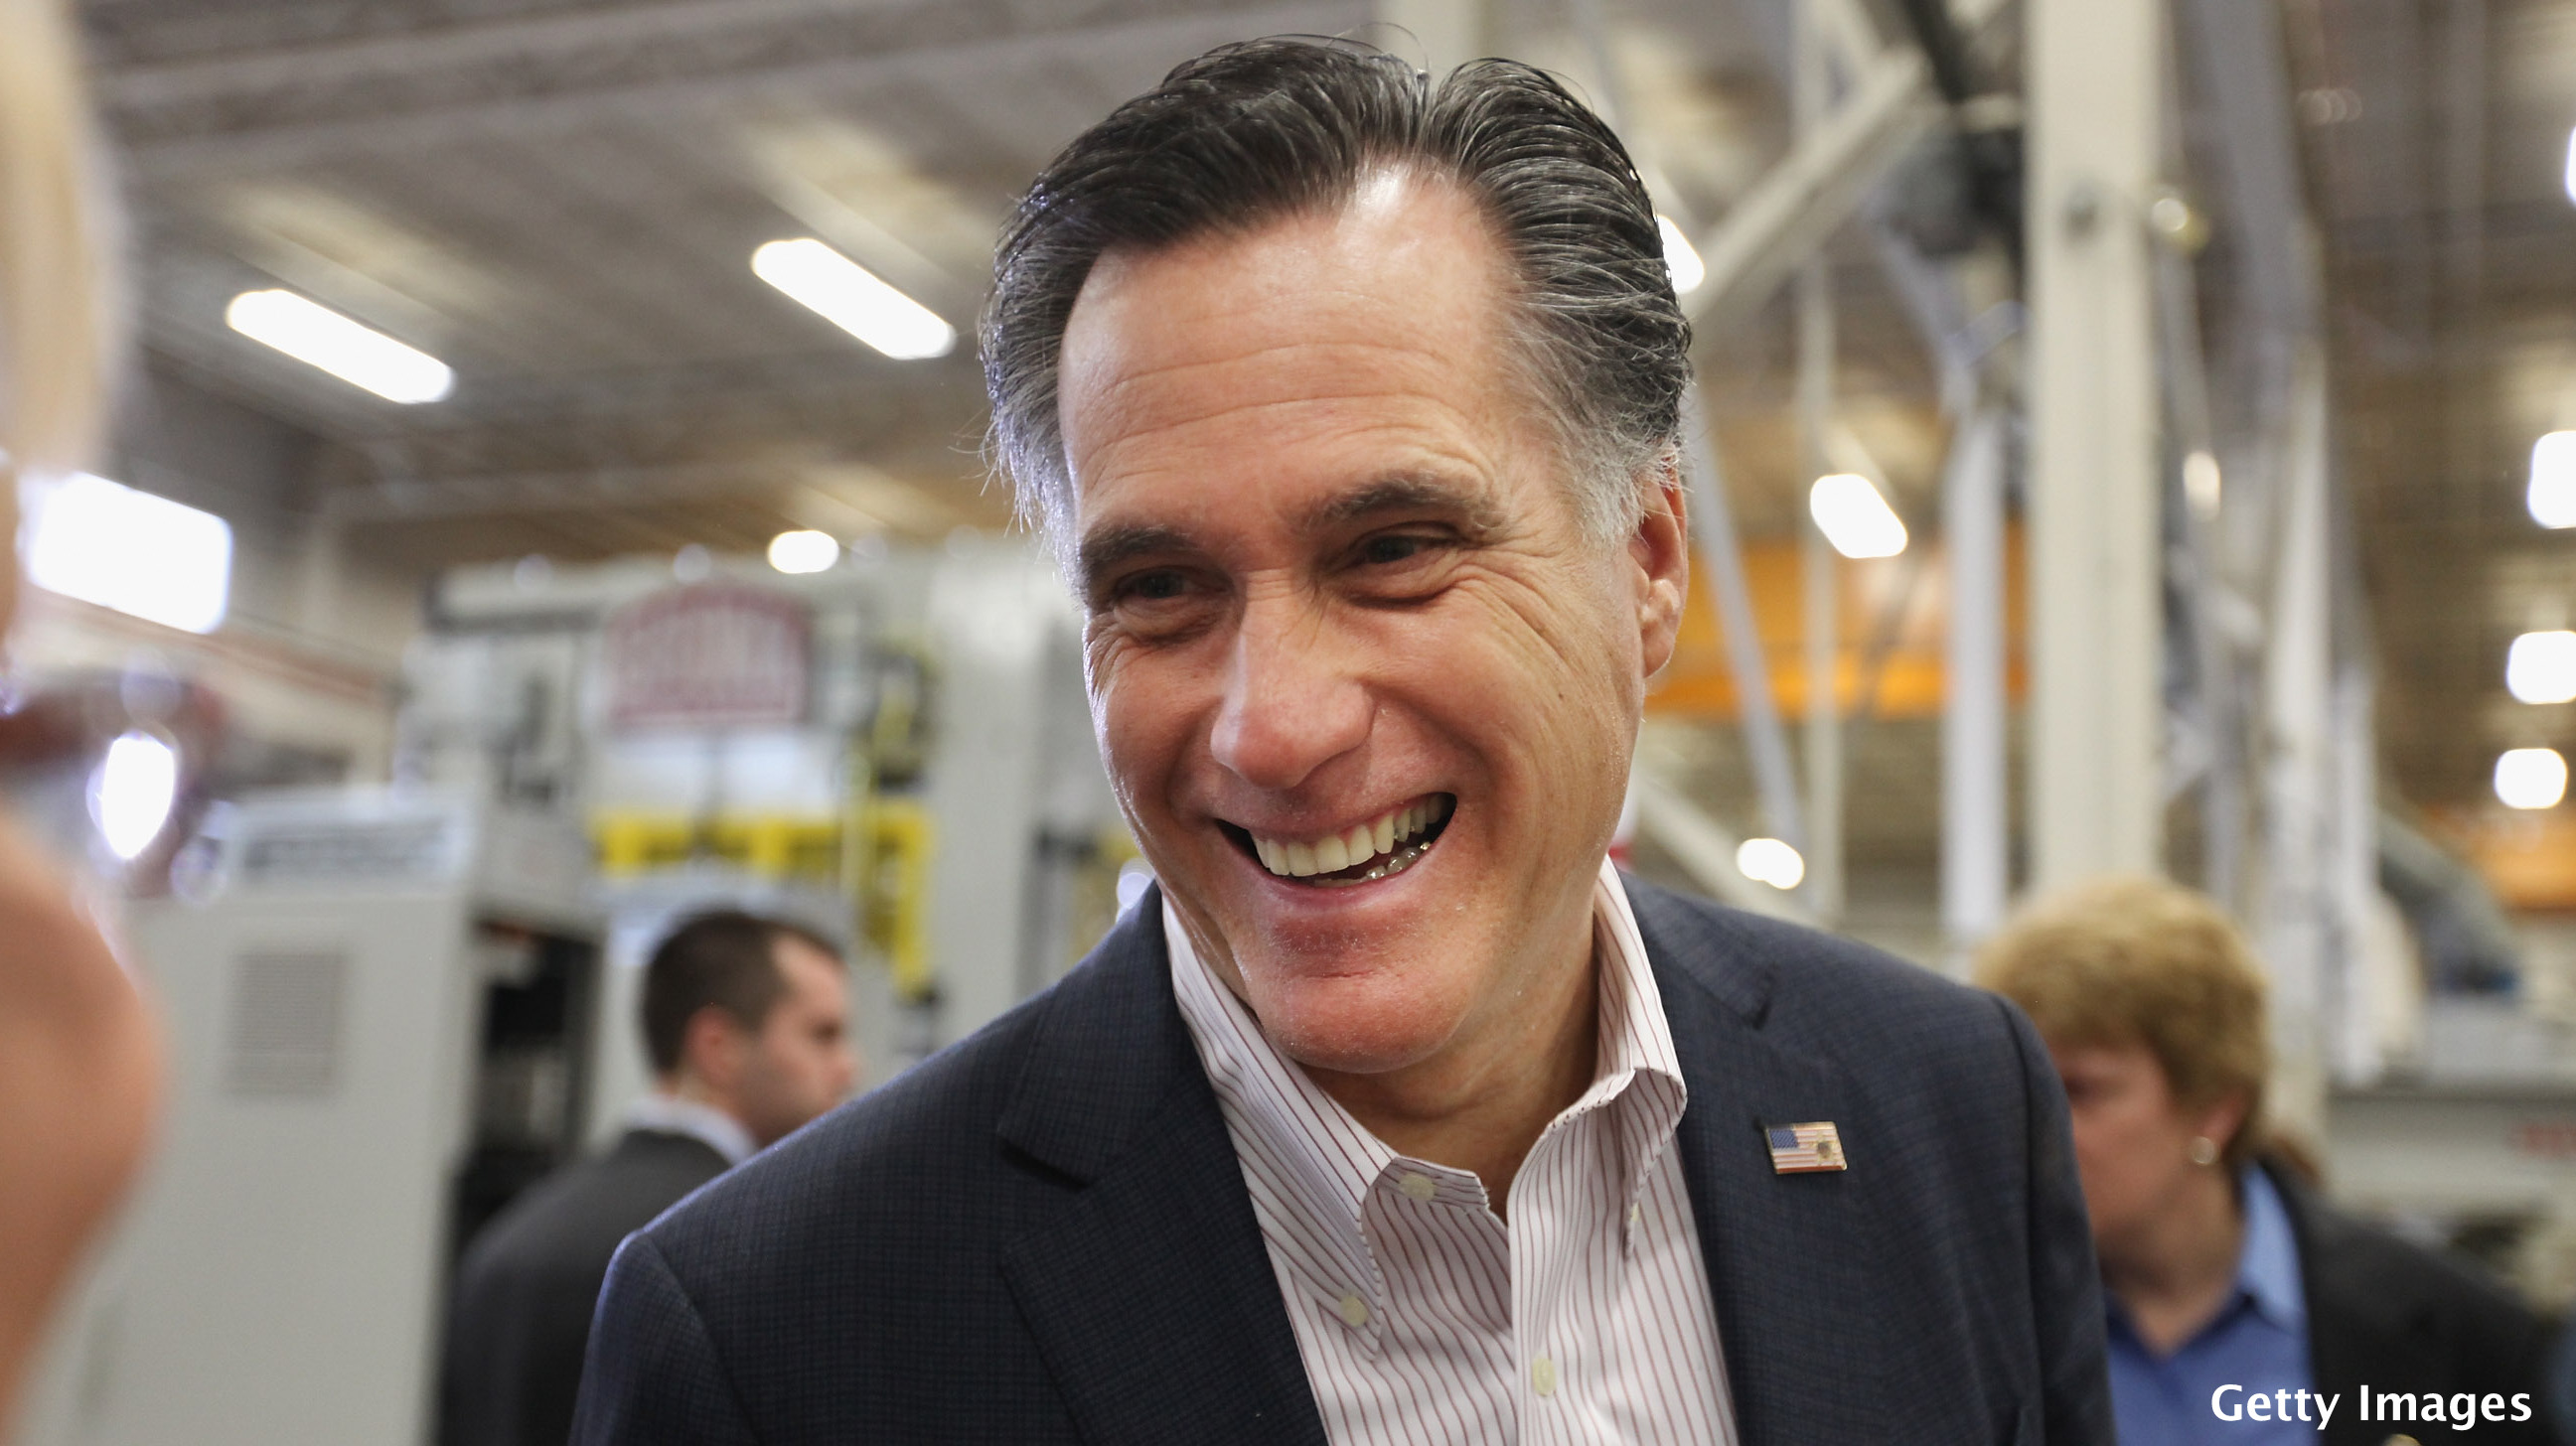 BREAKING: Romney wins Idaho caucuses, CNN projects